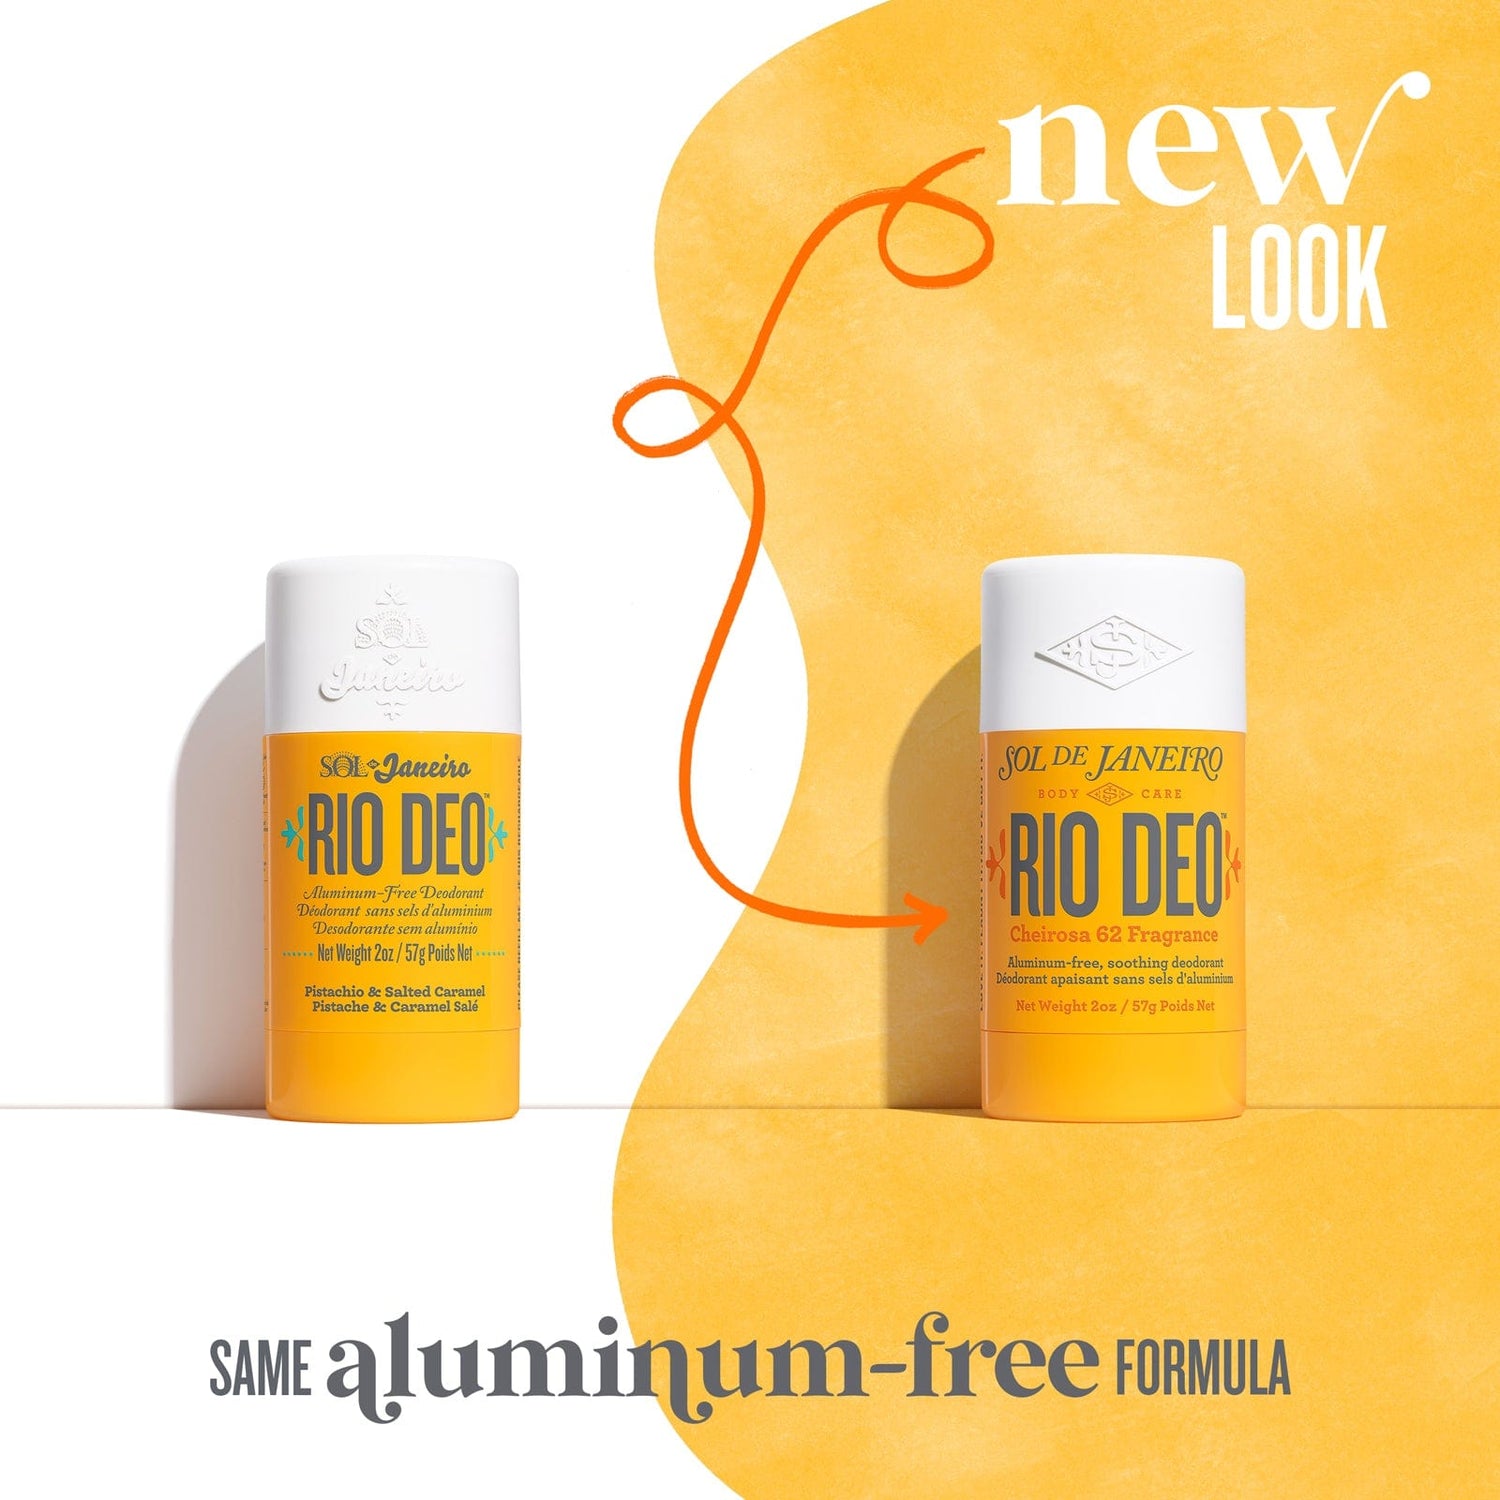 New Look - same aluminum-free formula 